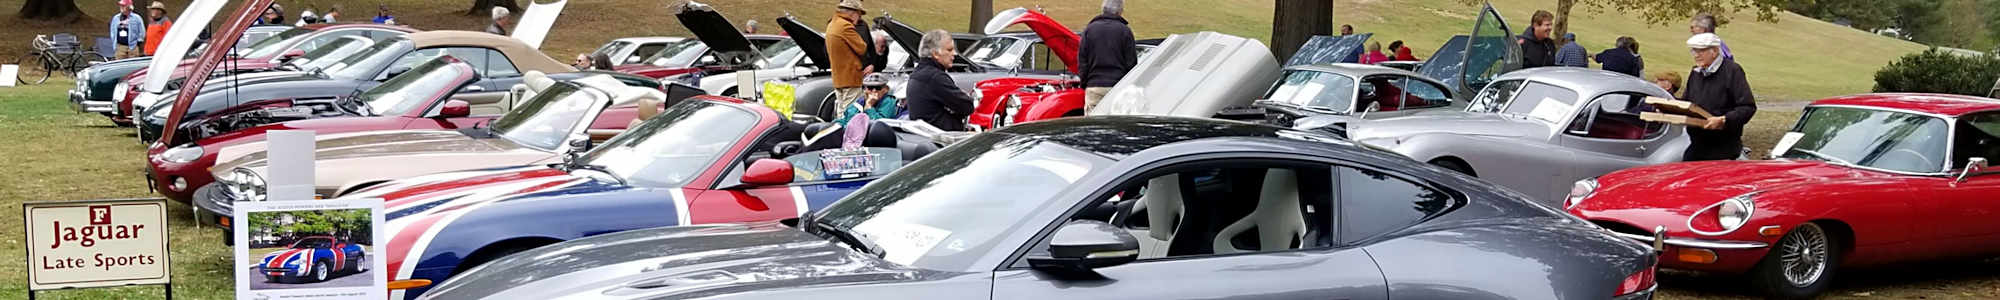 Jaguars at SVBCC Annual British Car Festival (car show)